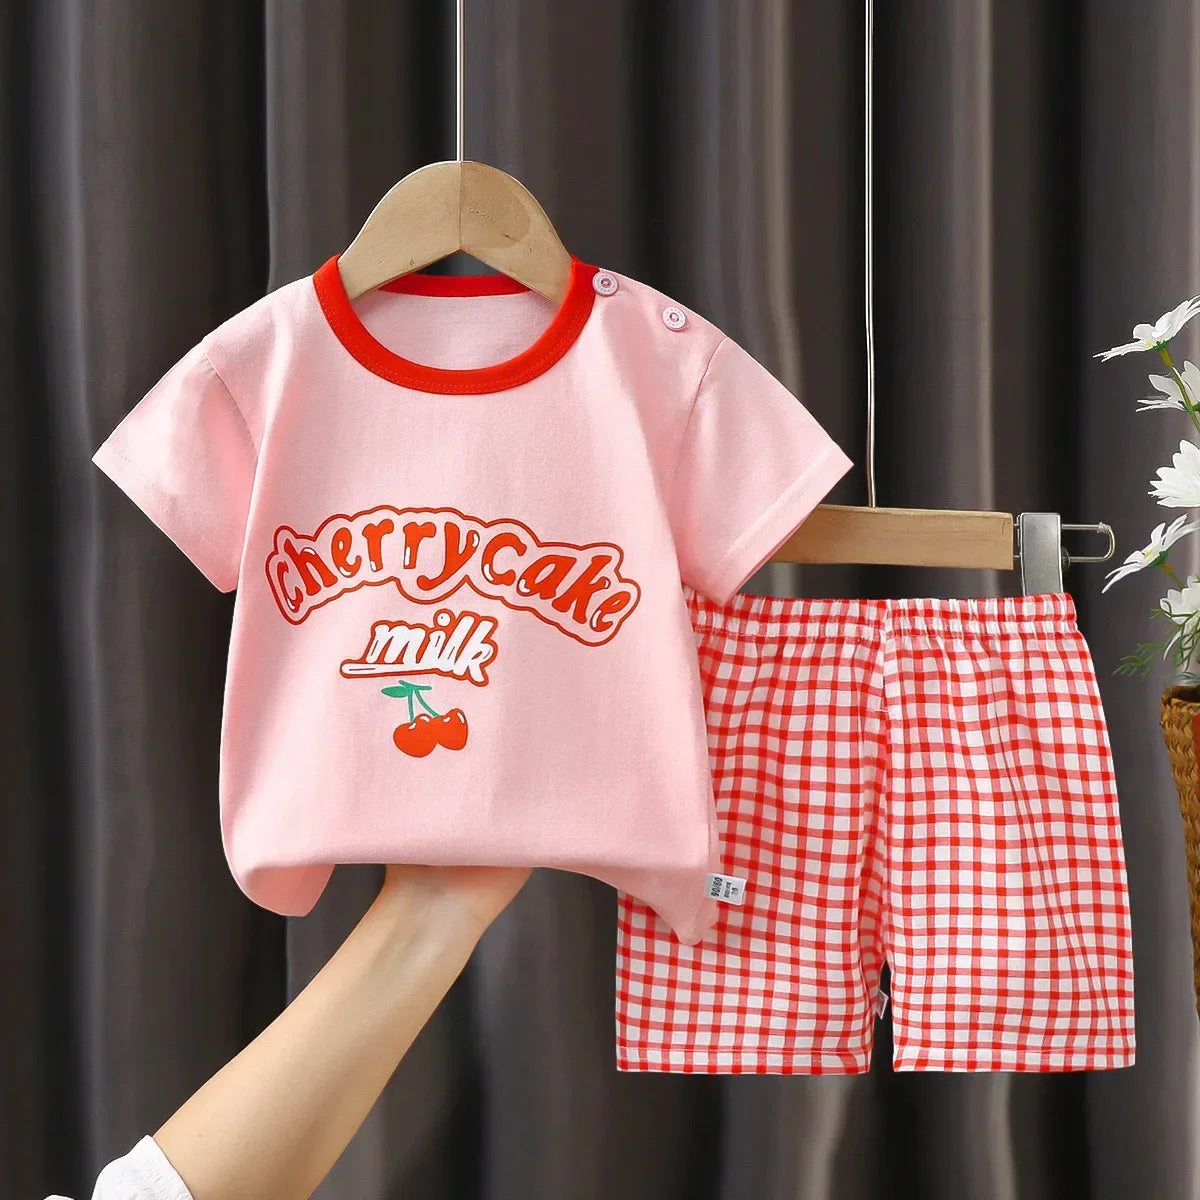 2PCS Children's Sets mother Kids Clothes Boys Girl T-shirt Shorts Summer Cotton Short sleeve Baby Children Clothing Toddler Suit